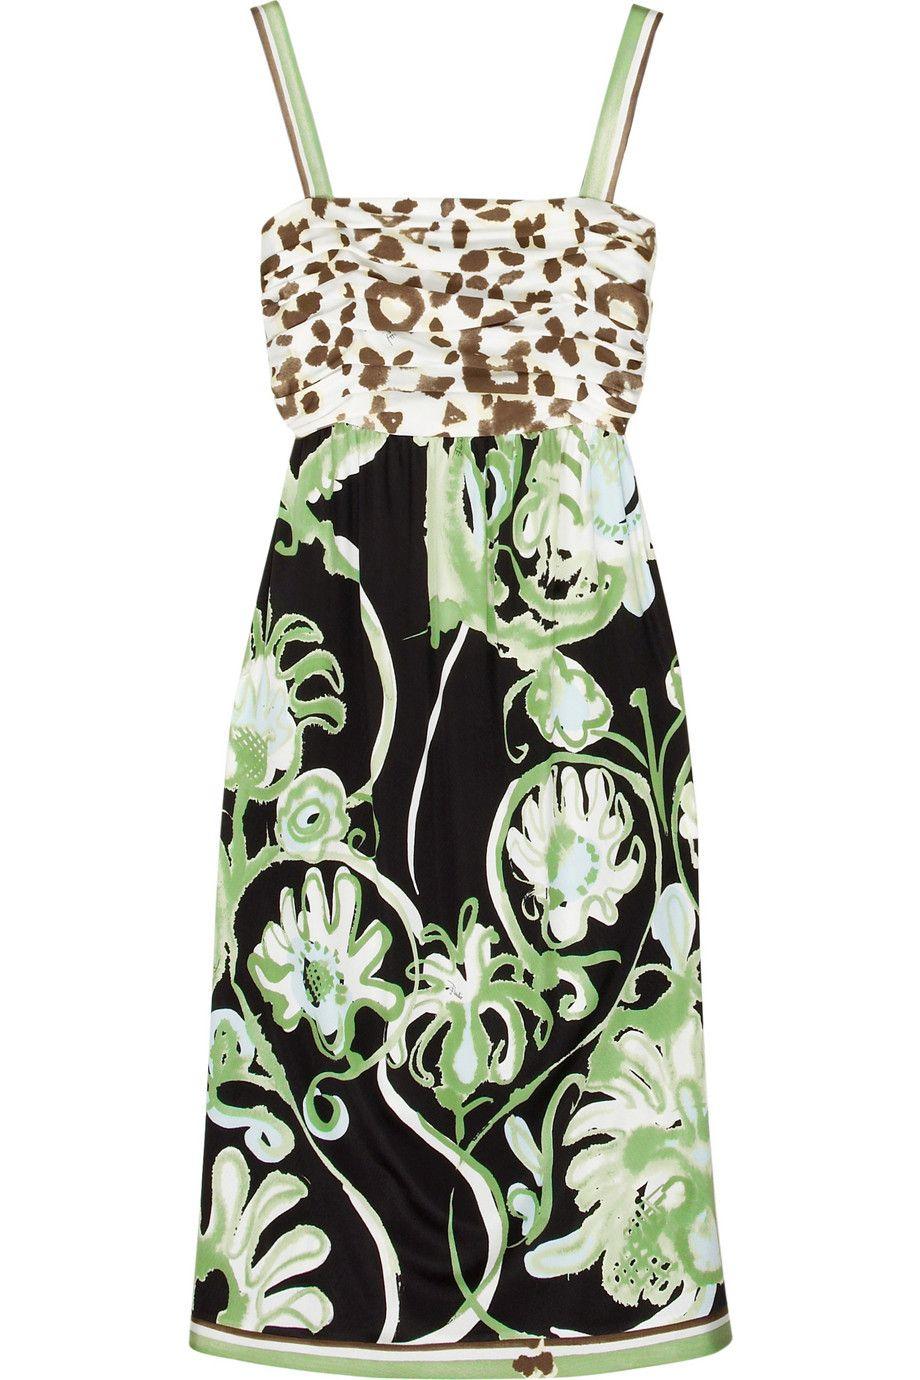 Emilio Pucci Silk Jersey Jungle Cheetah Animal Floral Botanical Print Dress 3